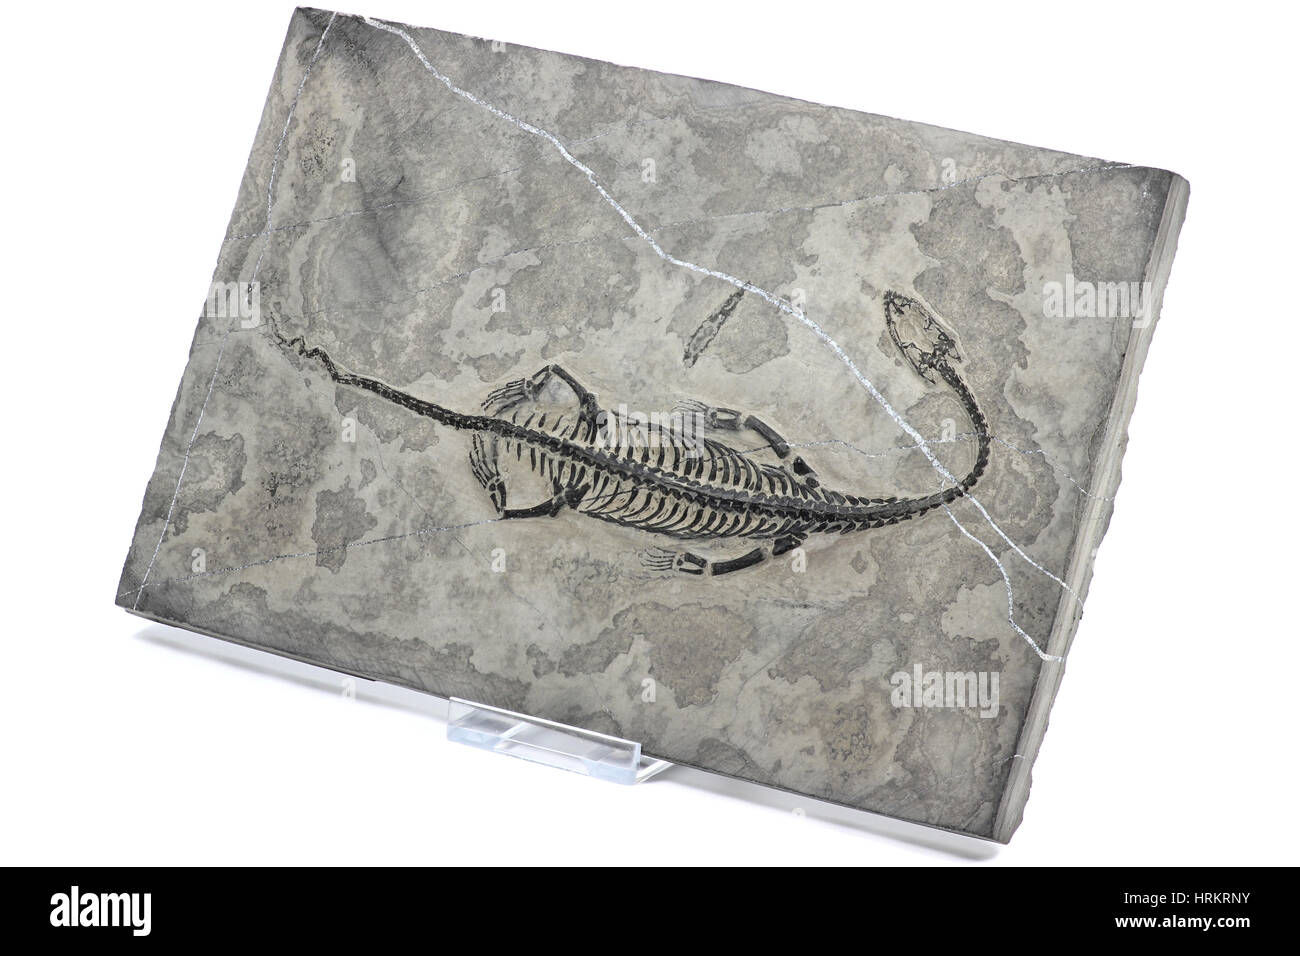 Keichousaurus originale hui trovati fossili in Guizhou Xingyi/ Cina isolato su sfondo bianco Foto Stock